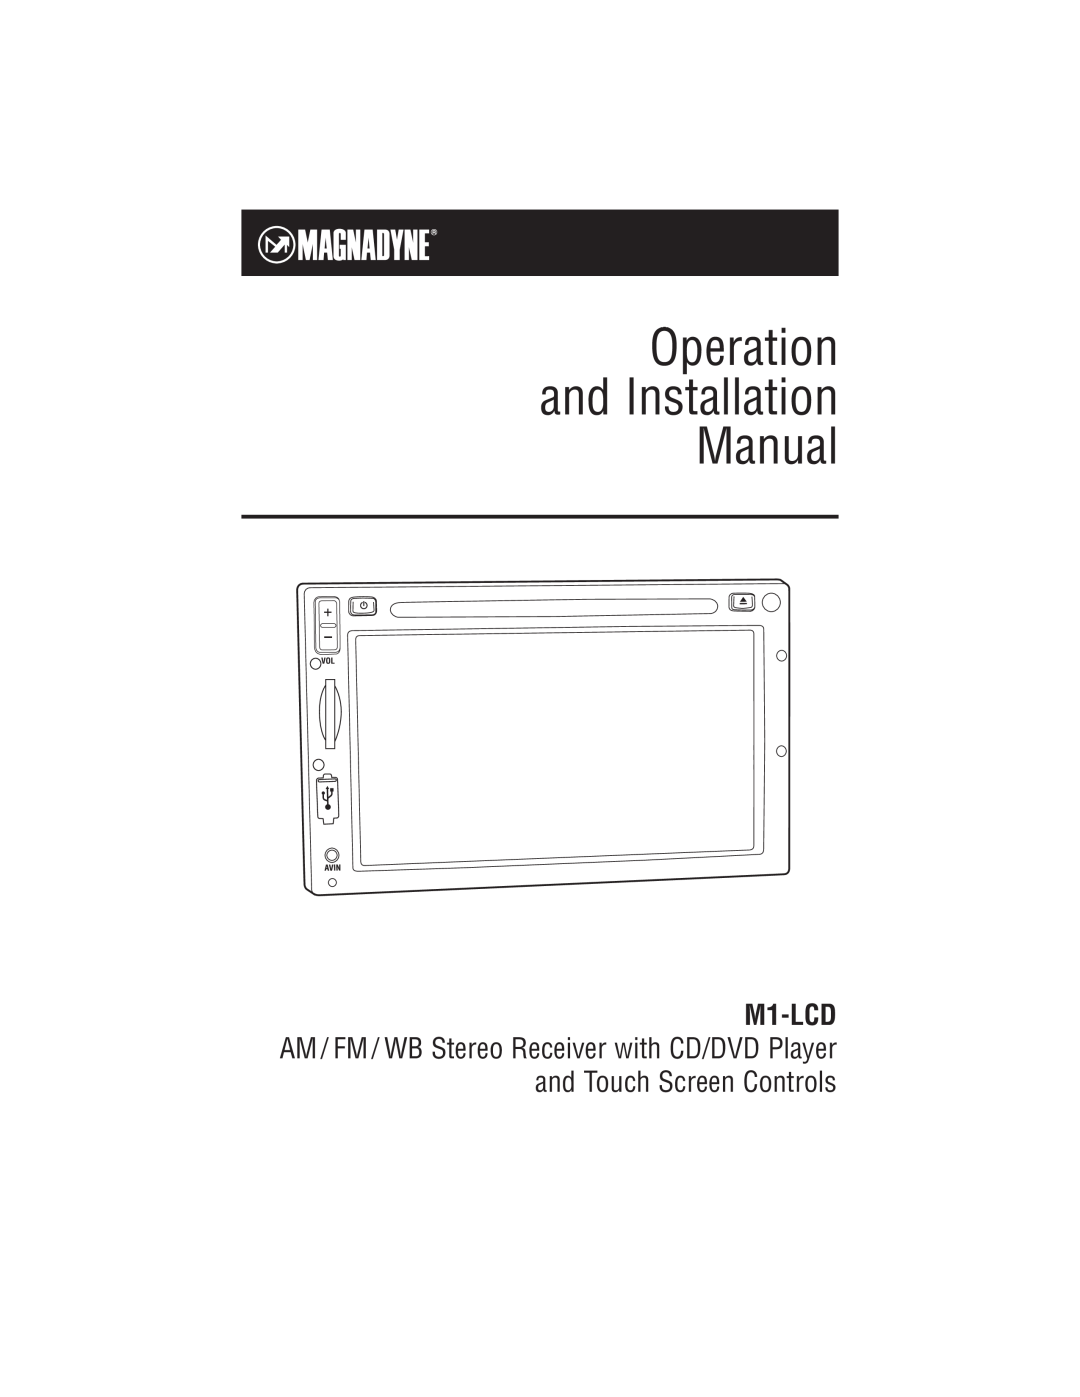 Magnadyne M1-LCD installation manual Operation and Installation Manual 